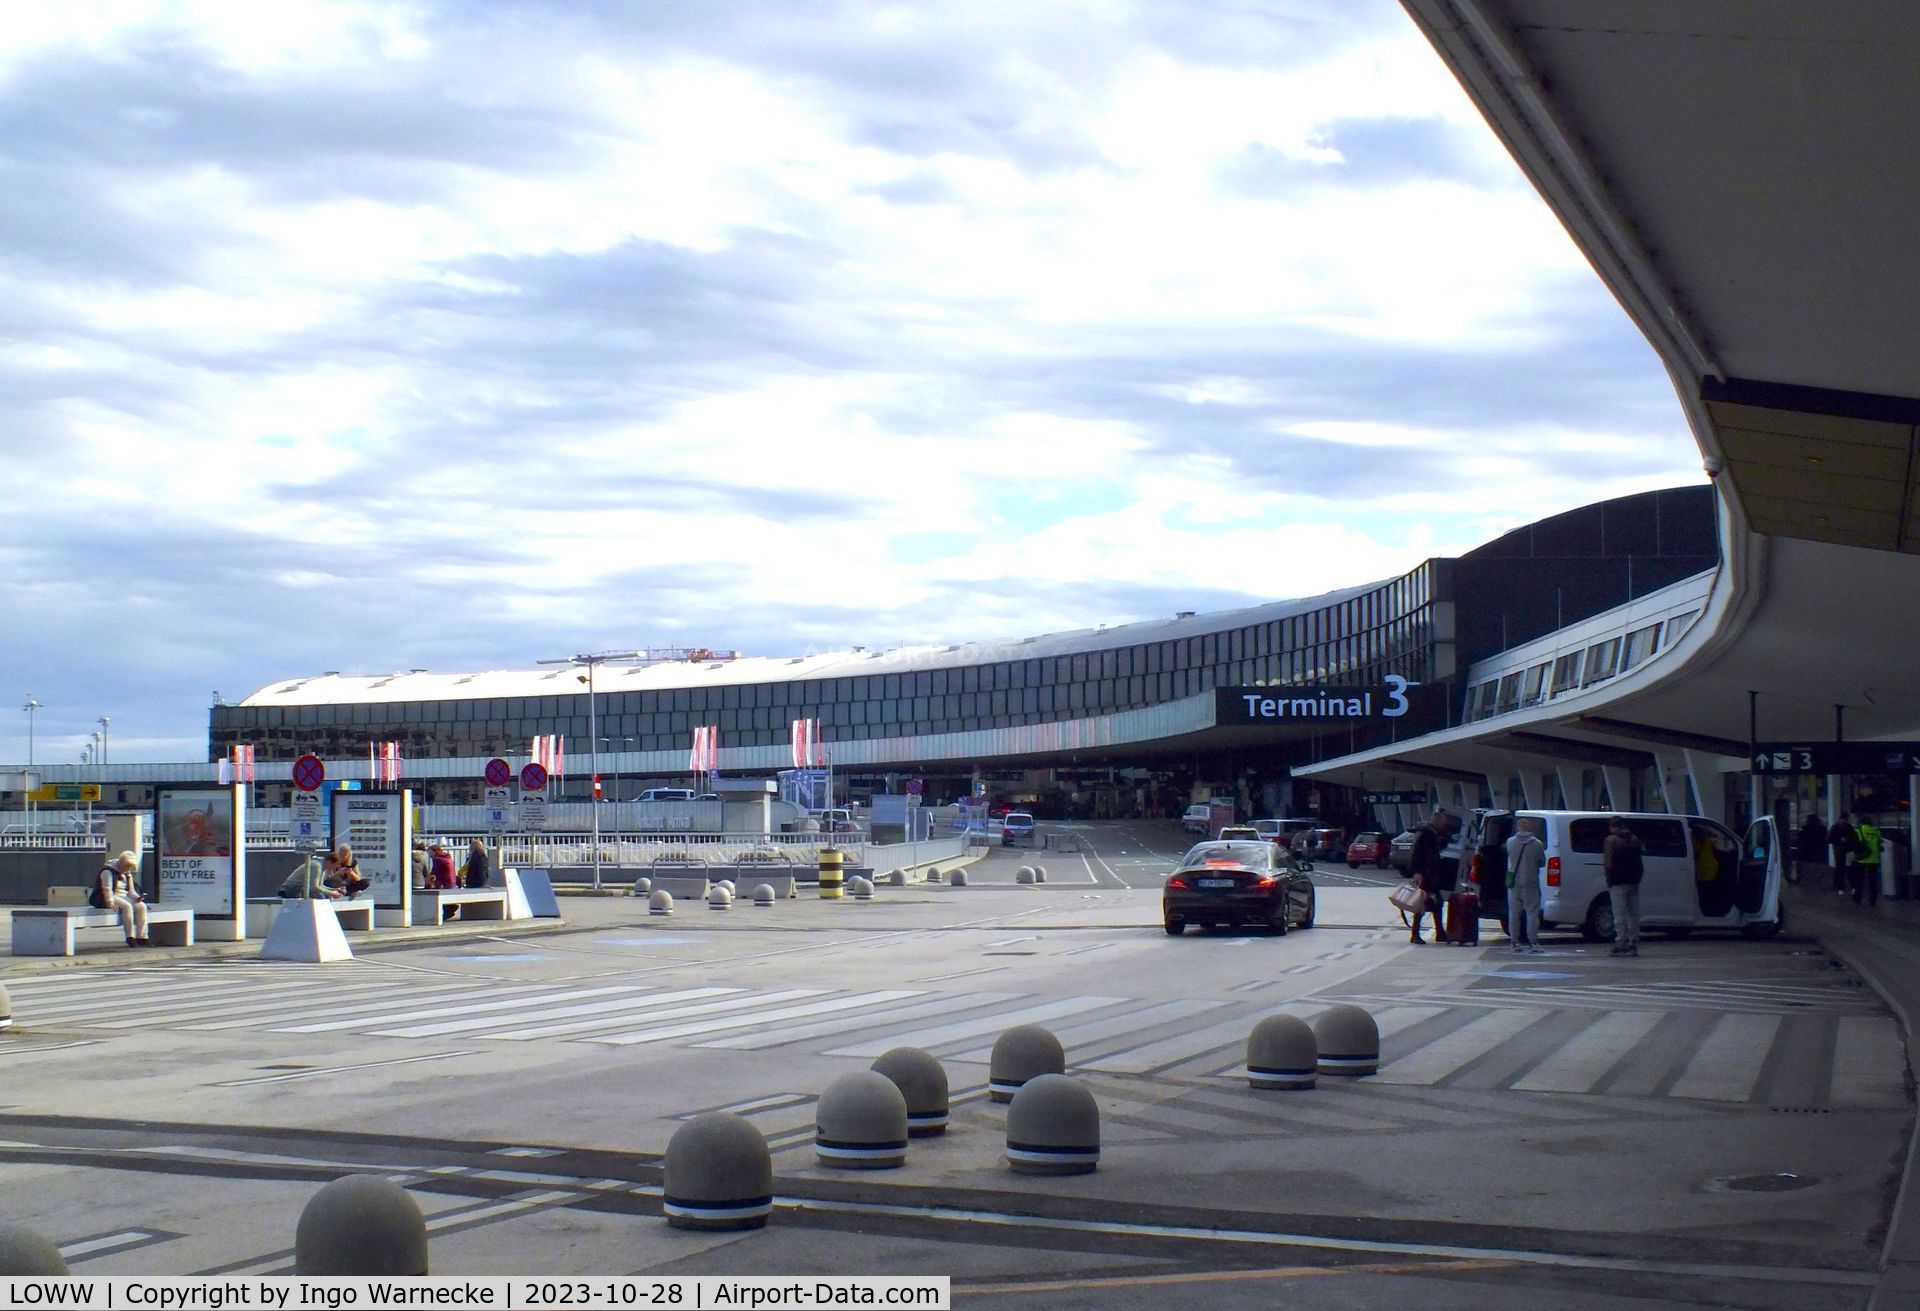 Vienna International Airport, Vienna Austria (LOWW) - streetside view of terminal 3 at Wien airport